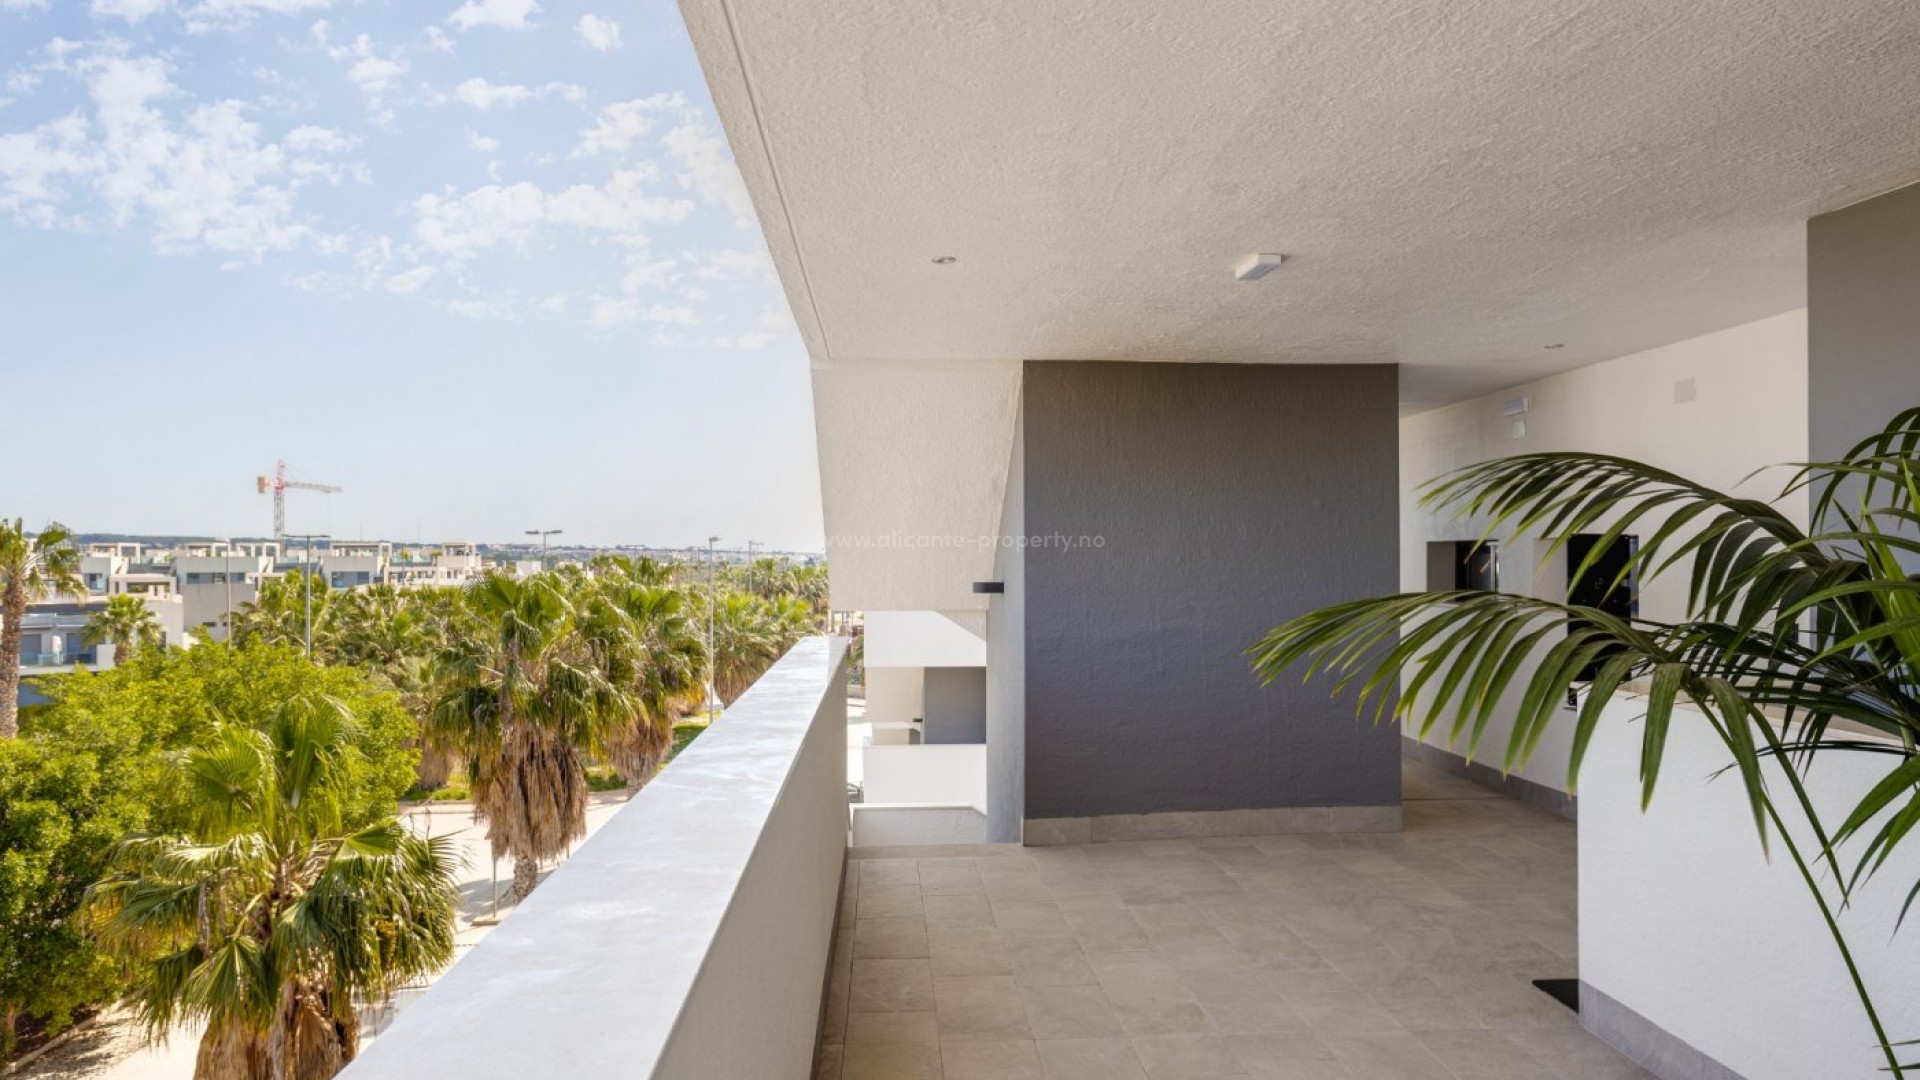 Penthouses and standard apartments in El Raso, Guardamar del Segura, 2/3 bedrooms, 2 bathrooms, 1st floor w/ garden or terrace or solarium for top floor